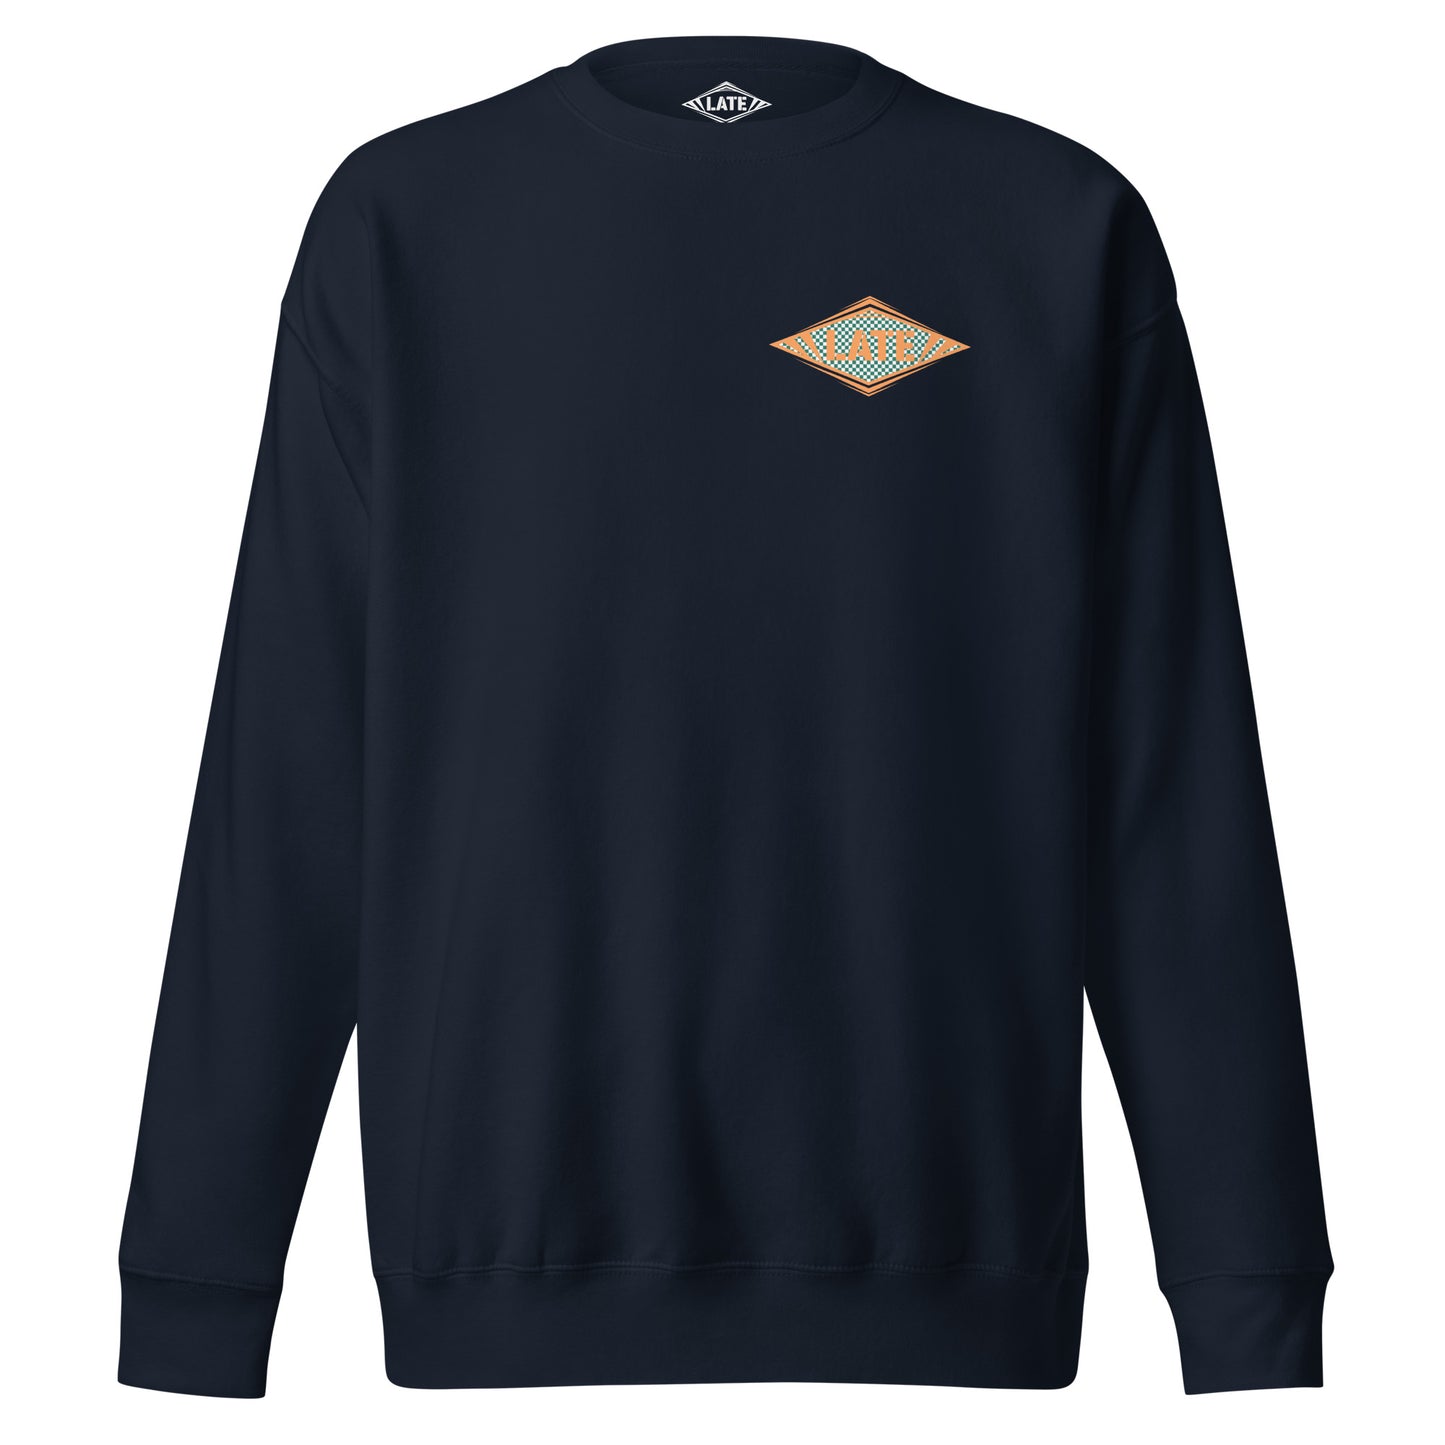 Sweatshirt Shred It logo Late à carreaux style Vans skateboarding sweat-shirt unisex couleur navy